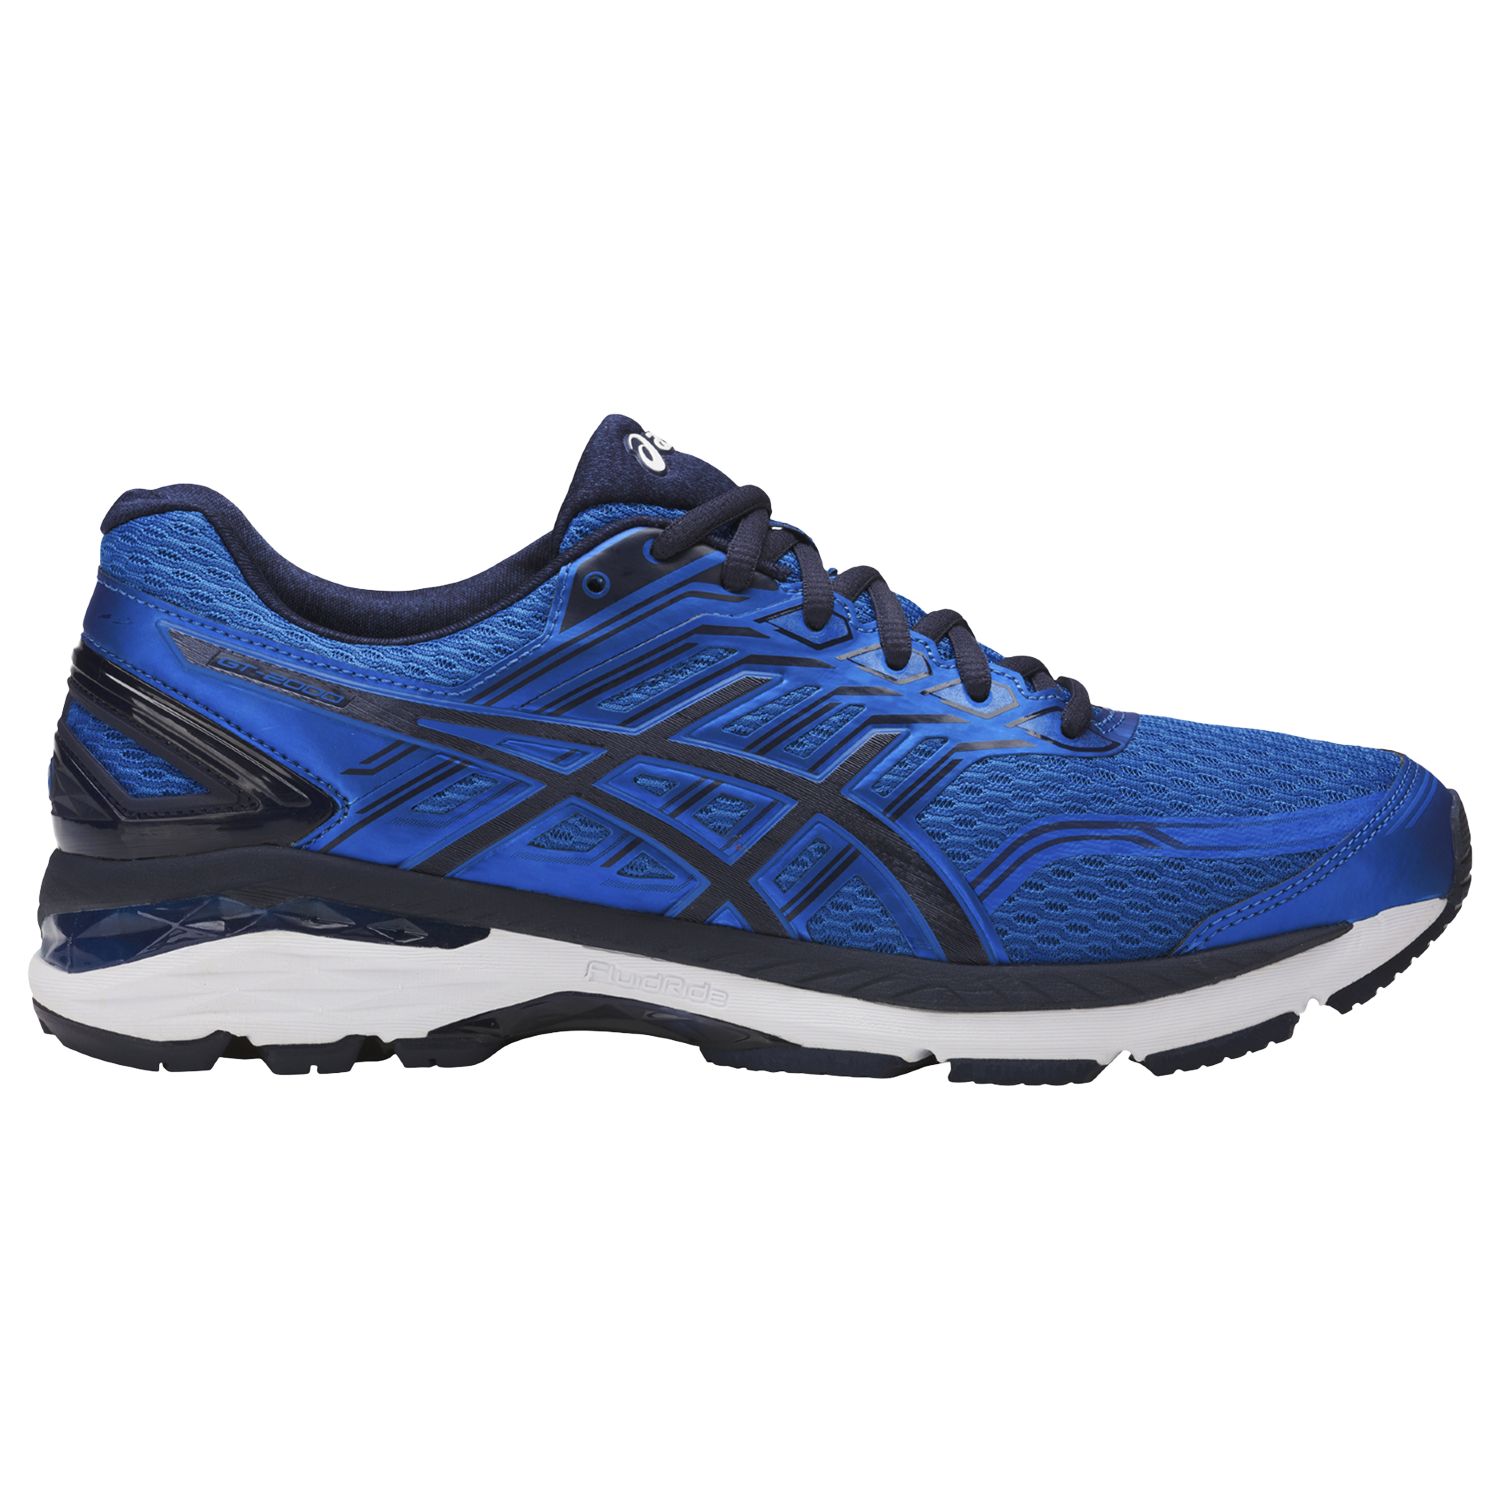 Asics GT-2000 5 Men's Running Shoes, Blue